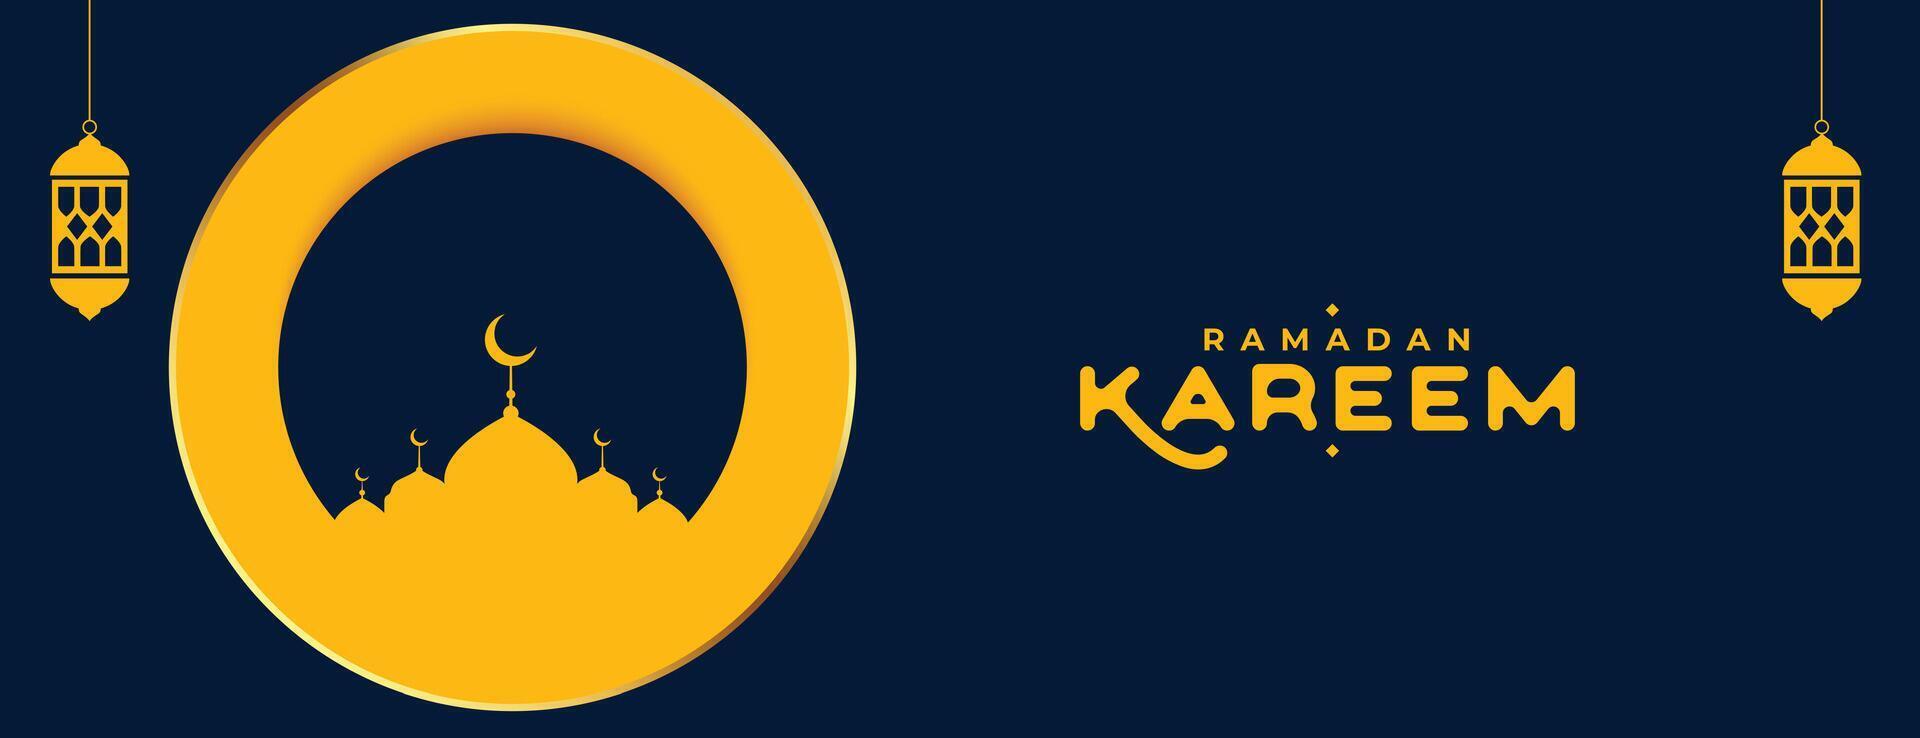 eid e Ramadã kareem plano islâmico bandeira Projeto vetor